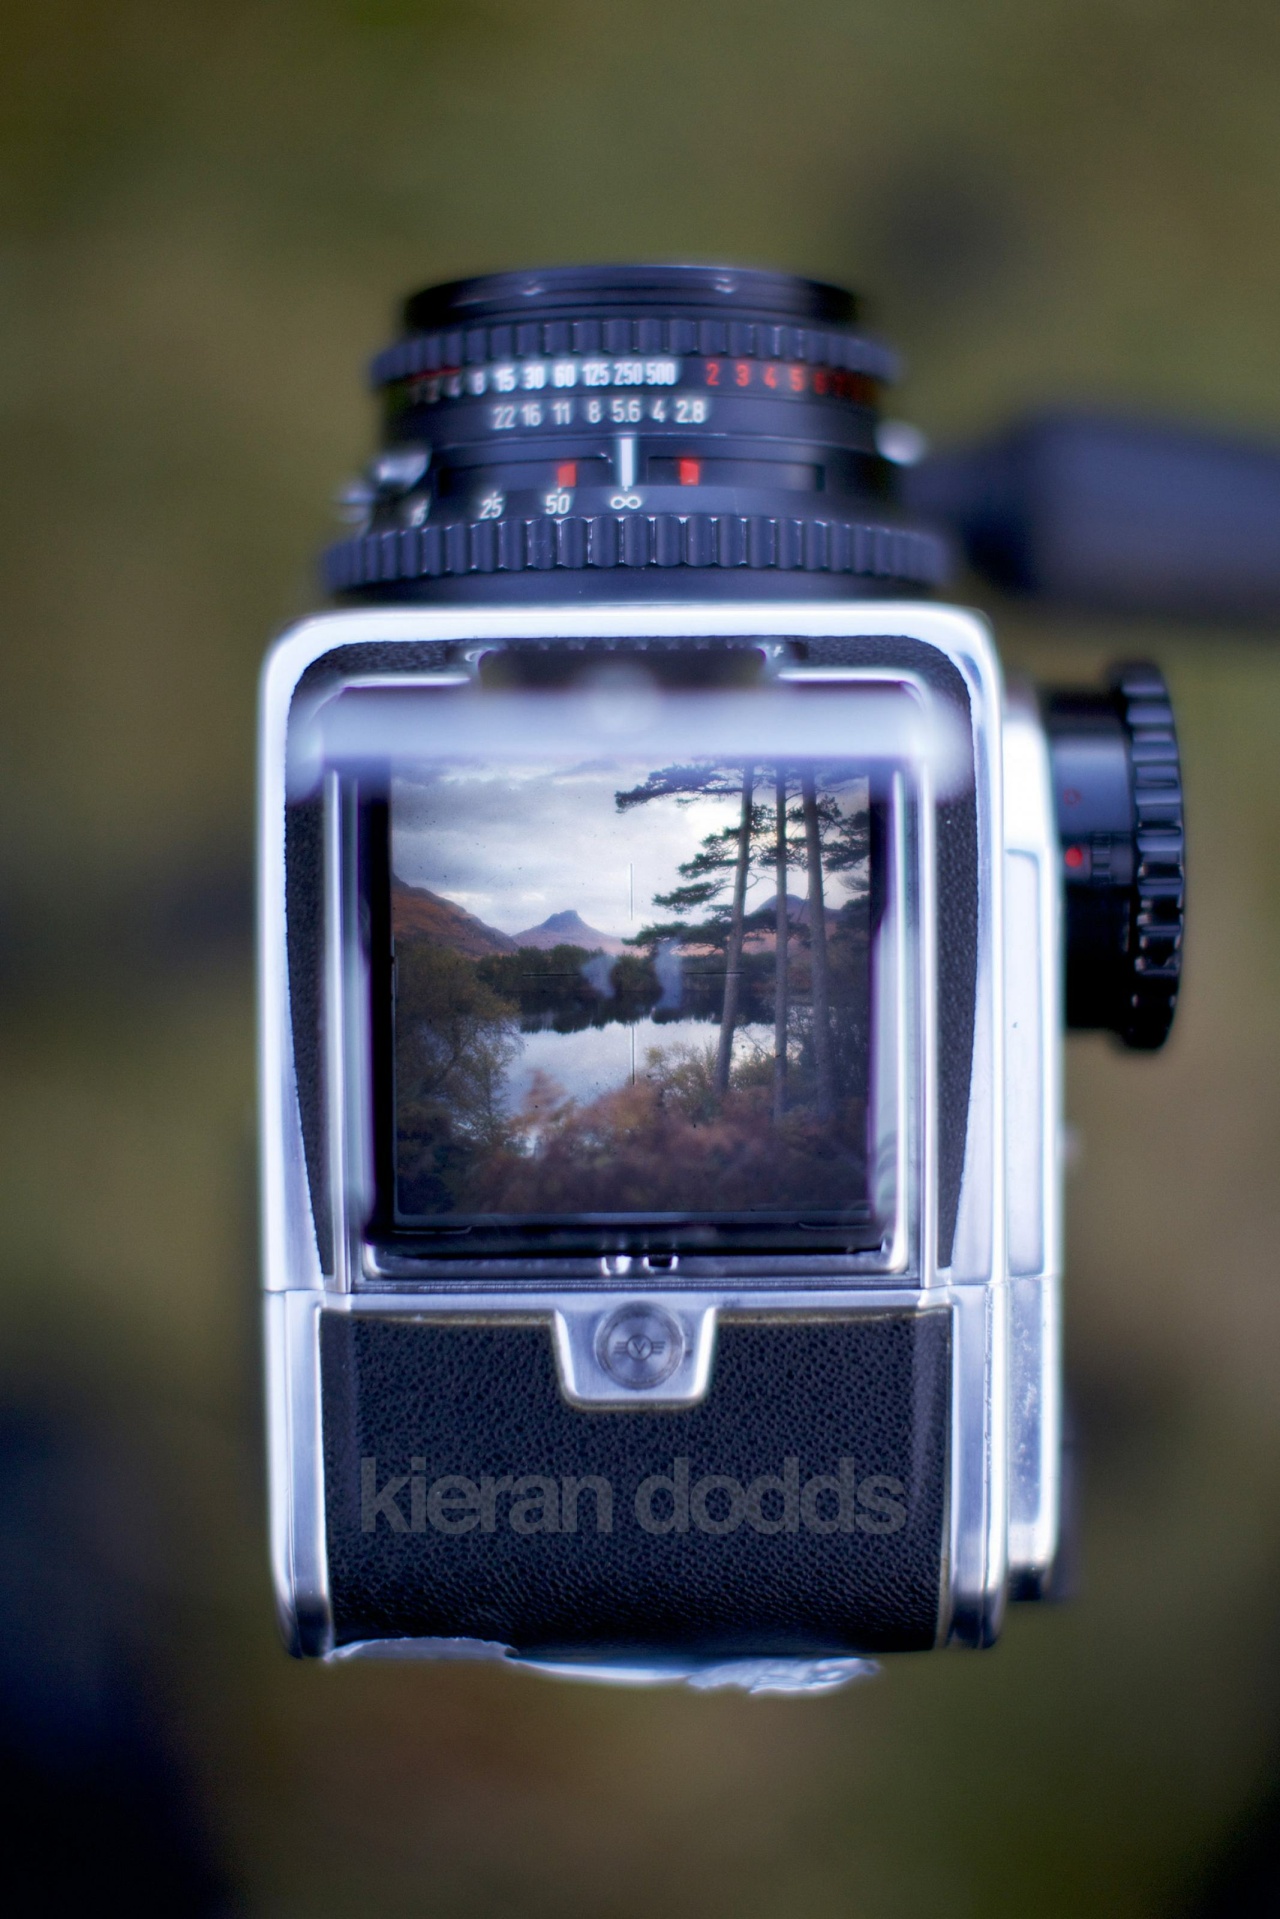 Kieran Dodds Seven Reasons to Shoot Film in a Digital Age, January 2014 